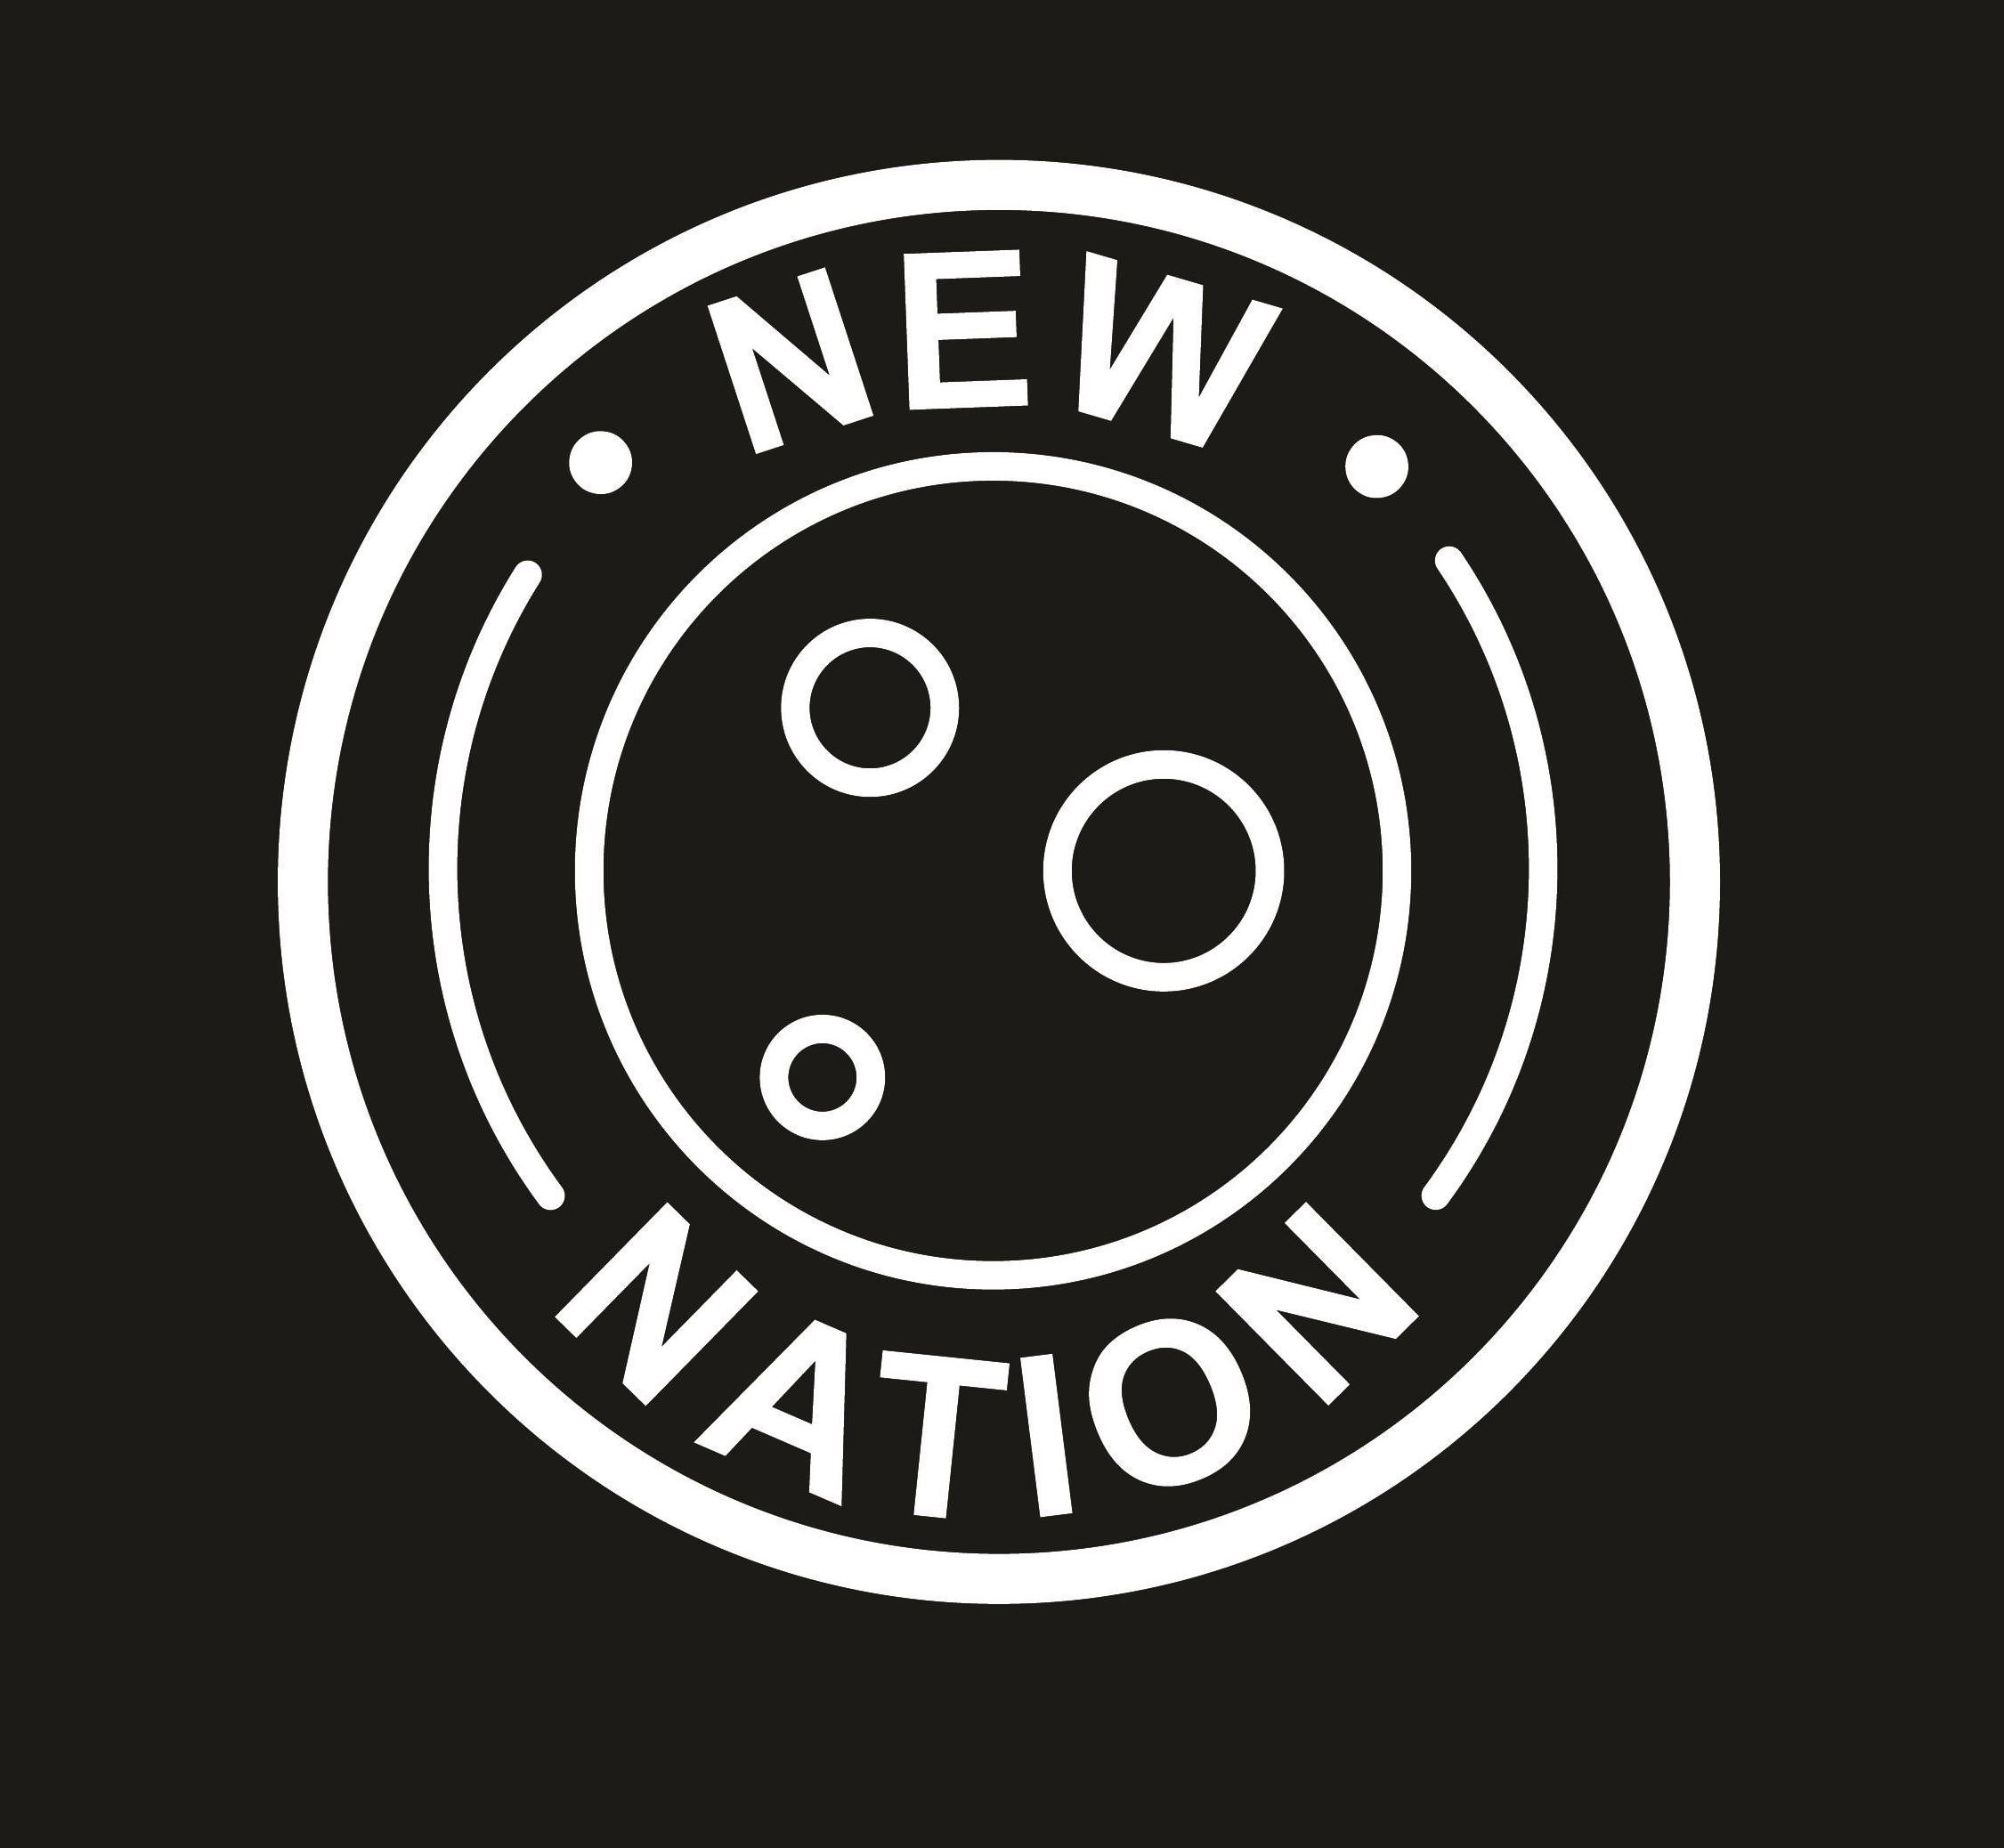 NEW NATION